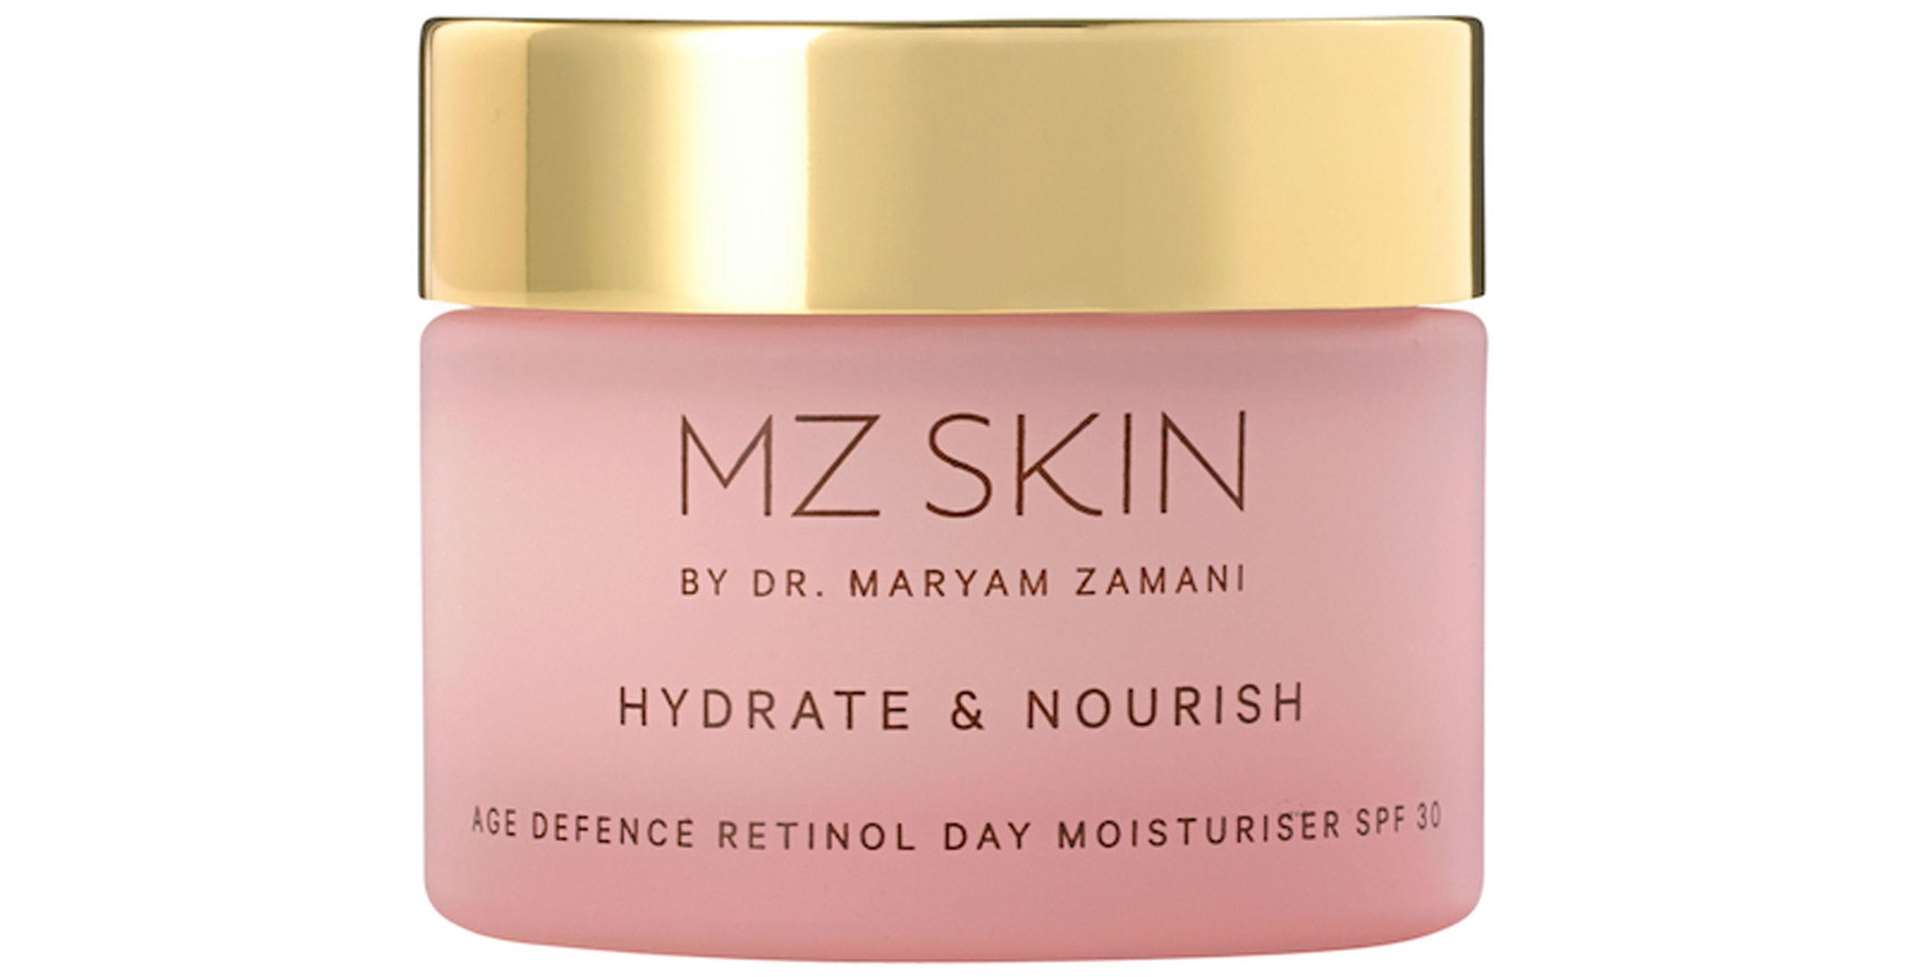 MZ Skin Hydrate & Nourish Age Defence Retinol Day Moisturizer